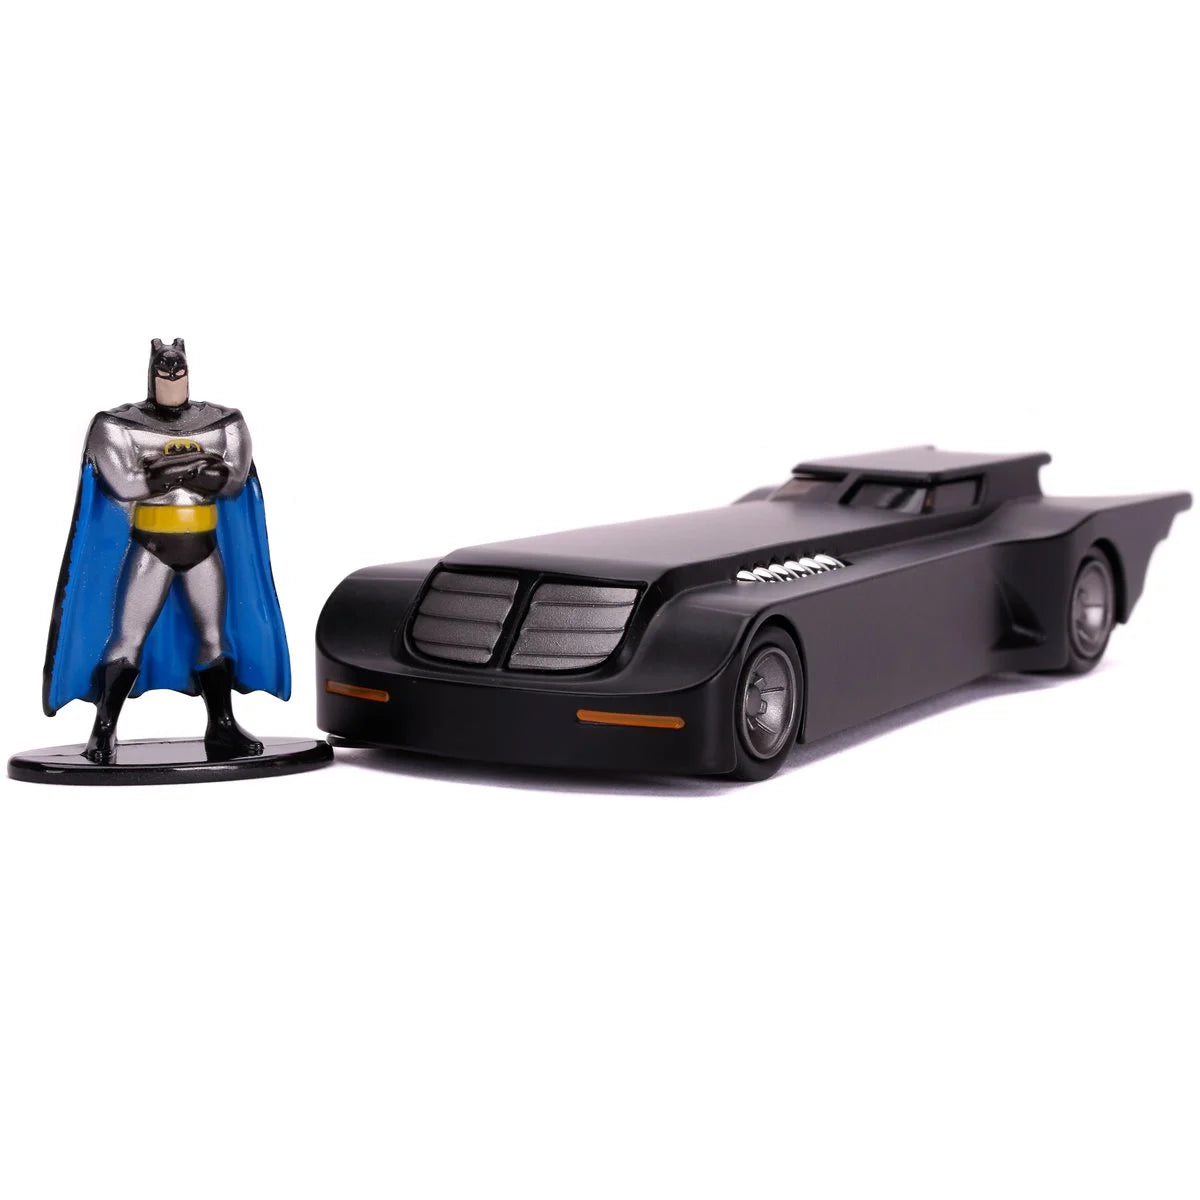 Batman Animated Series1:32 Scale Die-Cast Metal Vehicle with Figure